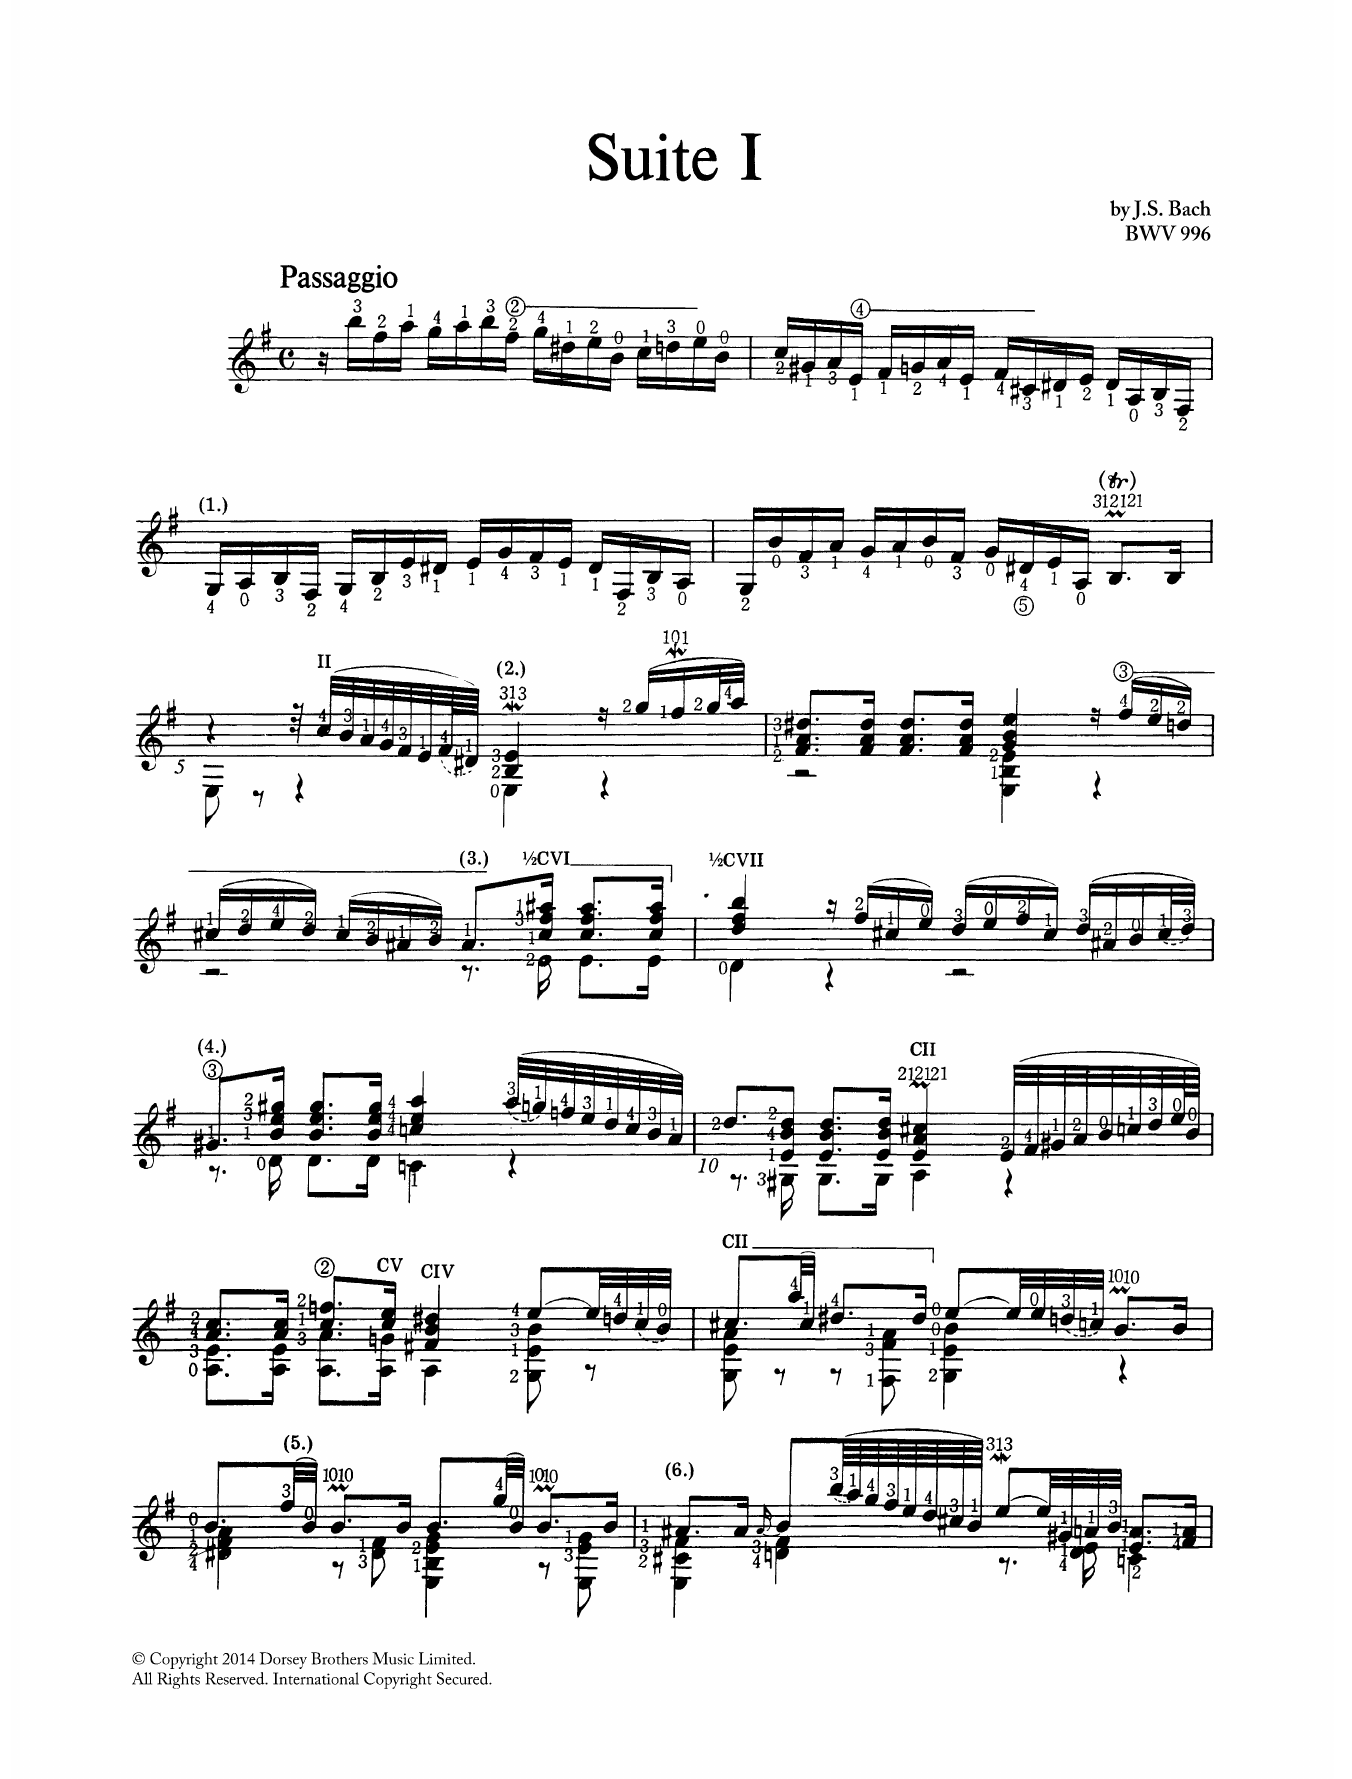 Johann Sebastian Bach Suite In E Minor BWV 996 Sheet Music Notes & Chords for Guitar Tab - Download or Print PDF